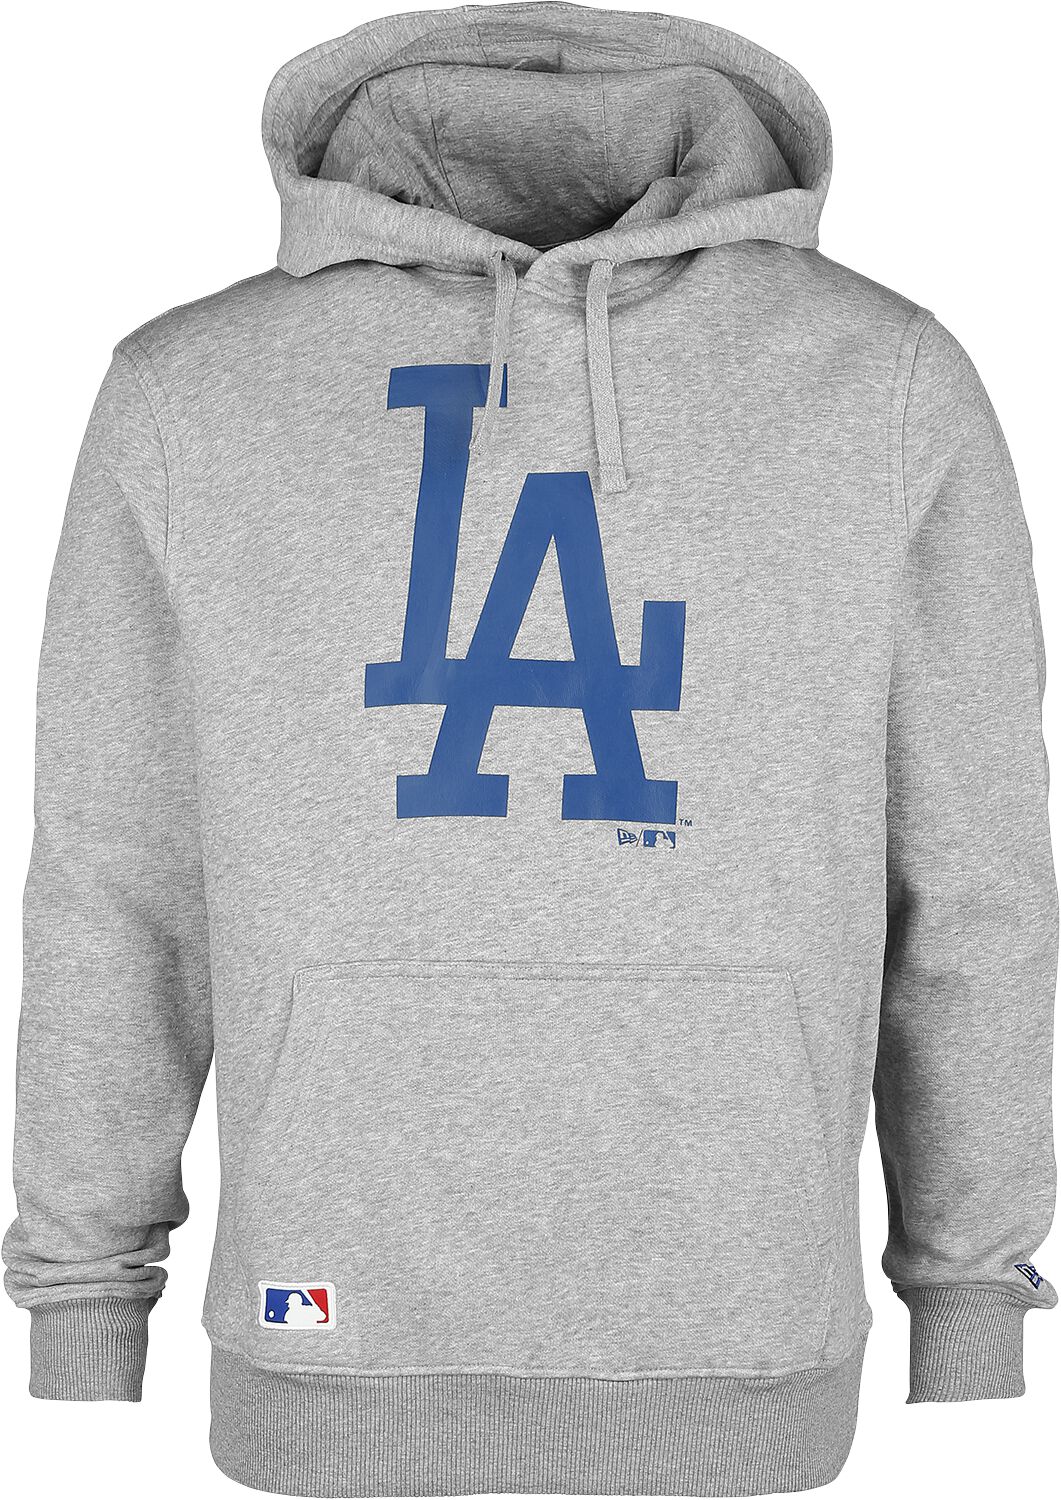 New Era - MLB Kapuzenpullover - Los Angeles Dodgers - S - für Männer - Größe S - hellgrau